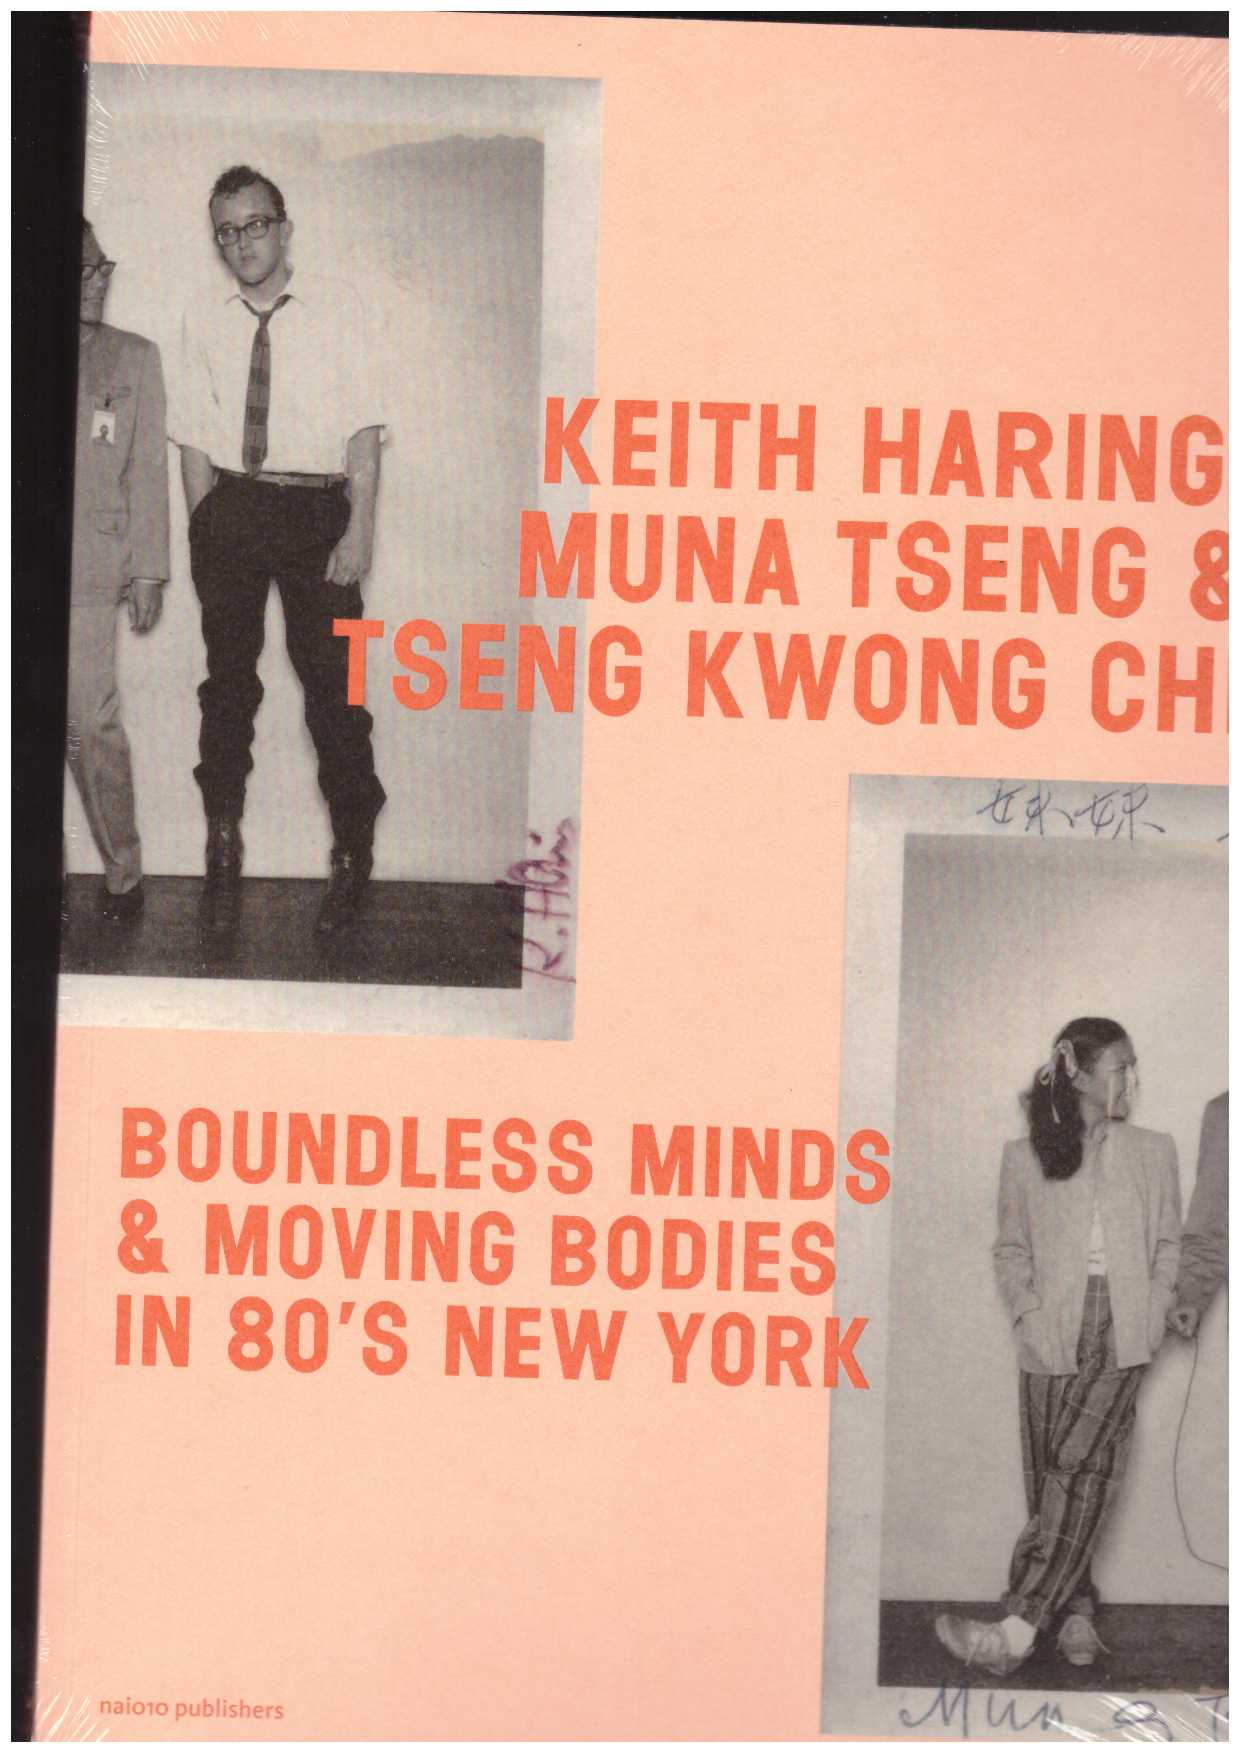 JORDENS, Cynthia; DE KLOE, Fabian; TSENG, Muna (eds.) - Keith Haring, Muna Tseng, and Tseng Kwong Chi: Boundless Minds & Moving Bodies in 80’s New York